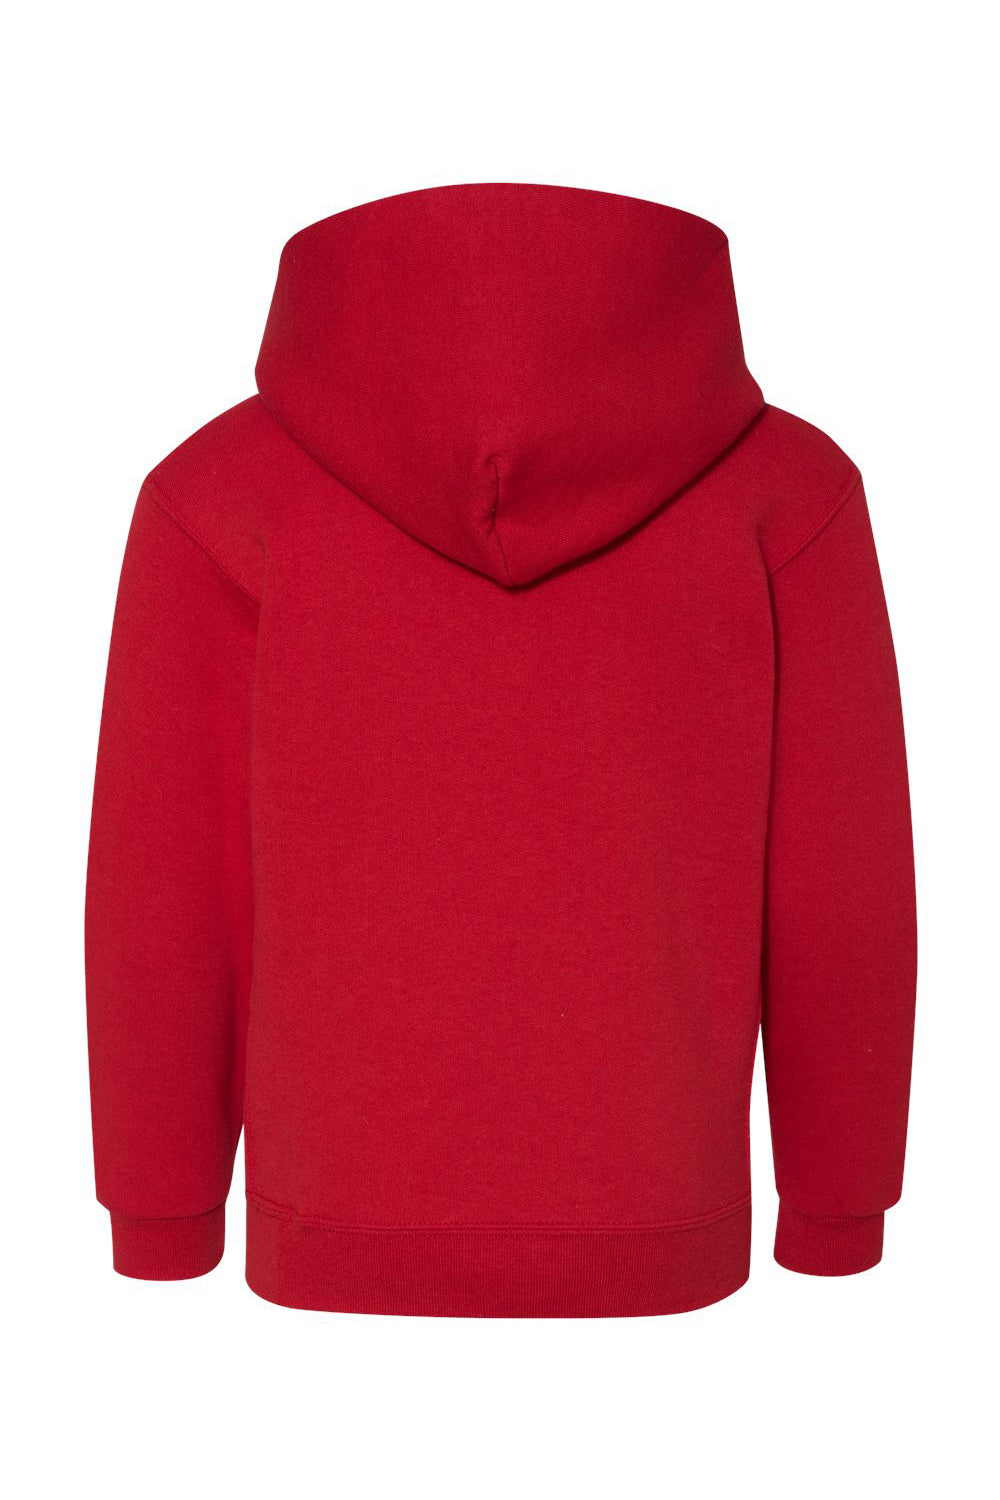 Russell Athletic 995HBB Youth Dri Power Hooded Sweatshirt Hoodie True Red Flat Back